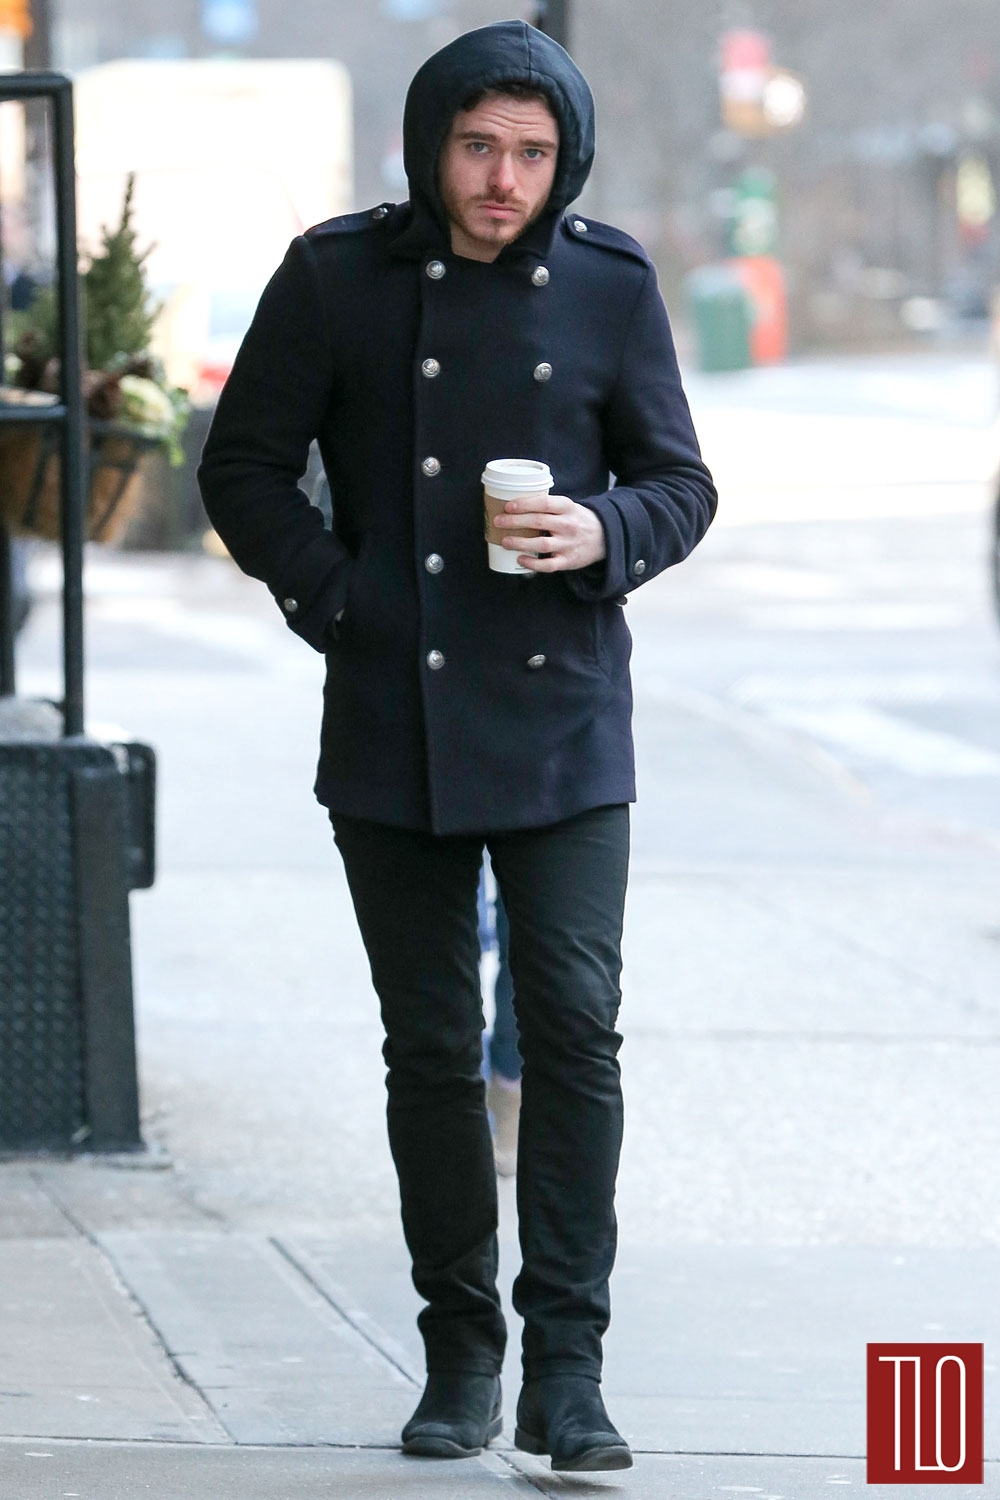 Richard-Madden-GOTS-NYC-BNMSC-Street-Style-Menswear-Tom-Lorenzo-Site-TLO (1)